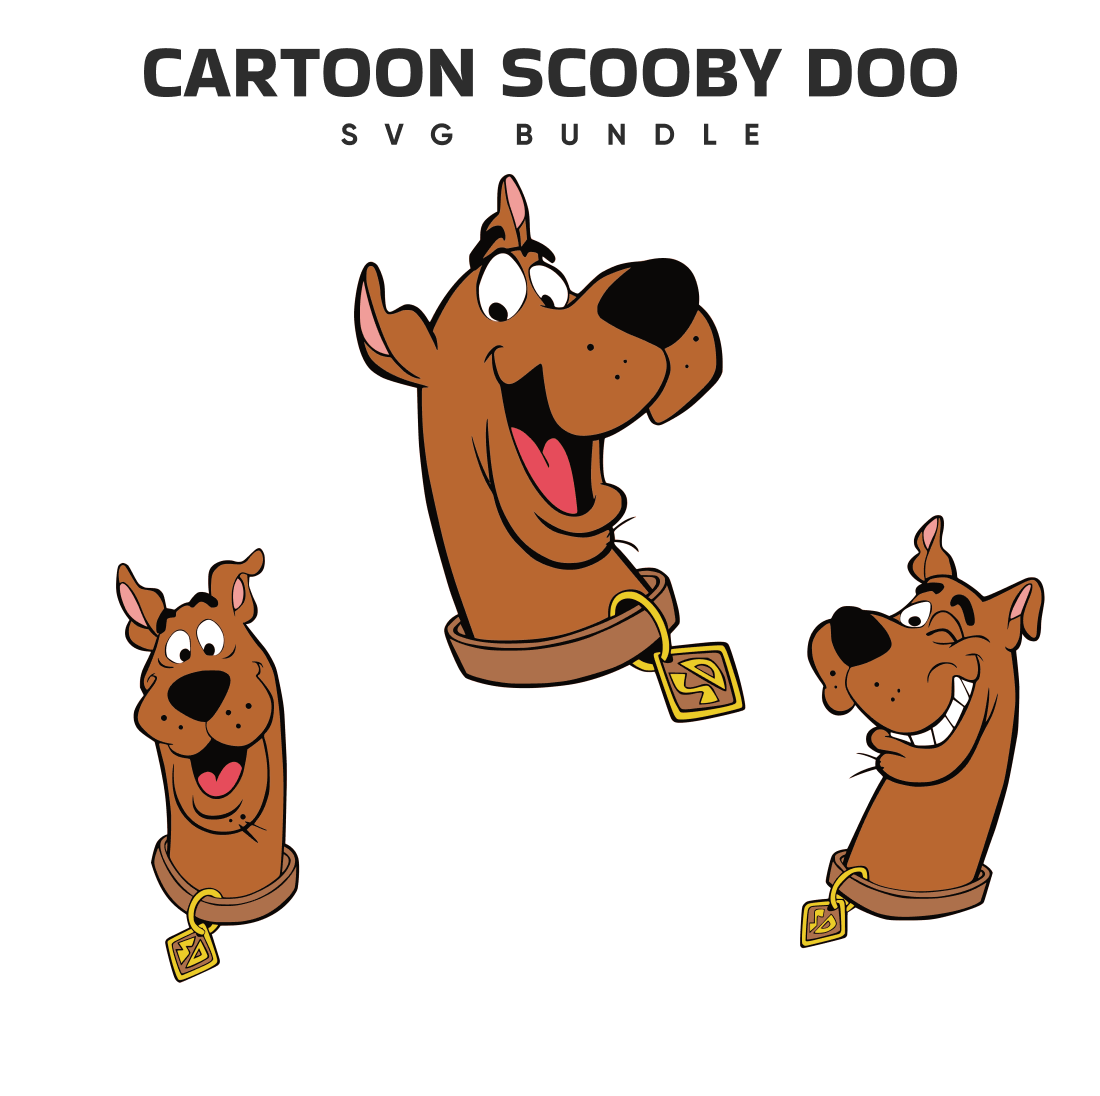 Cartoon Scooby Doo SVG